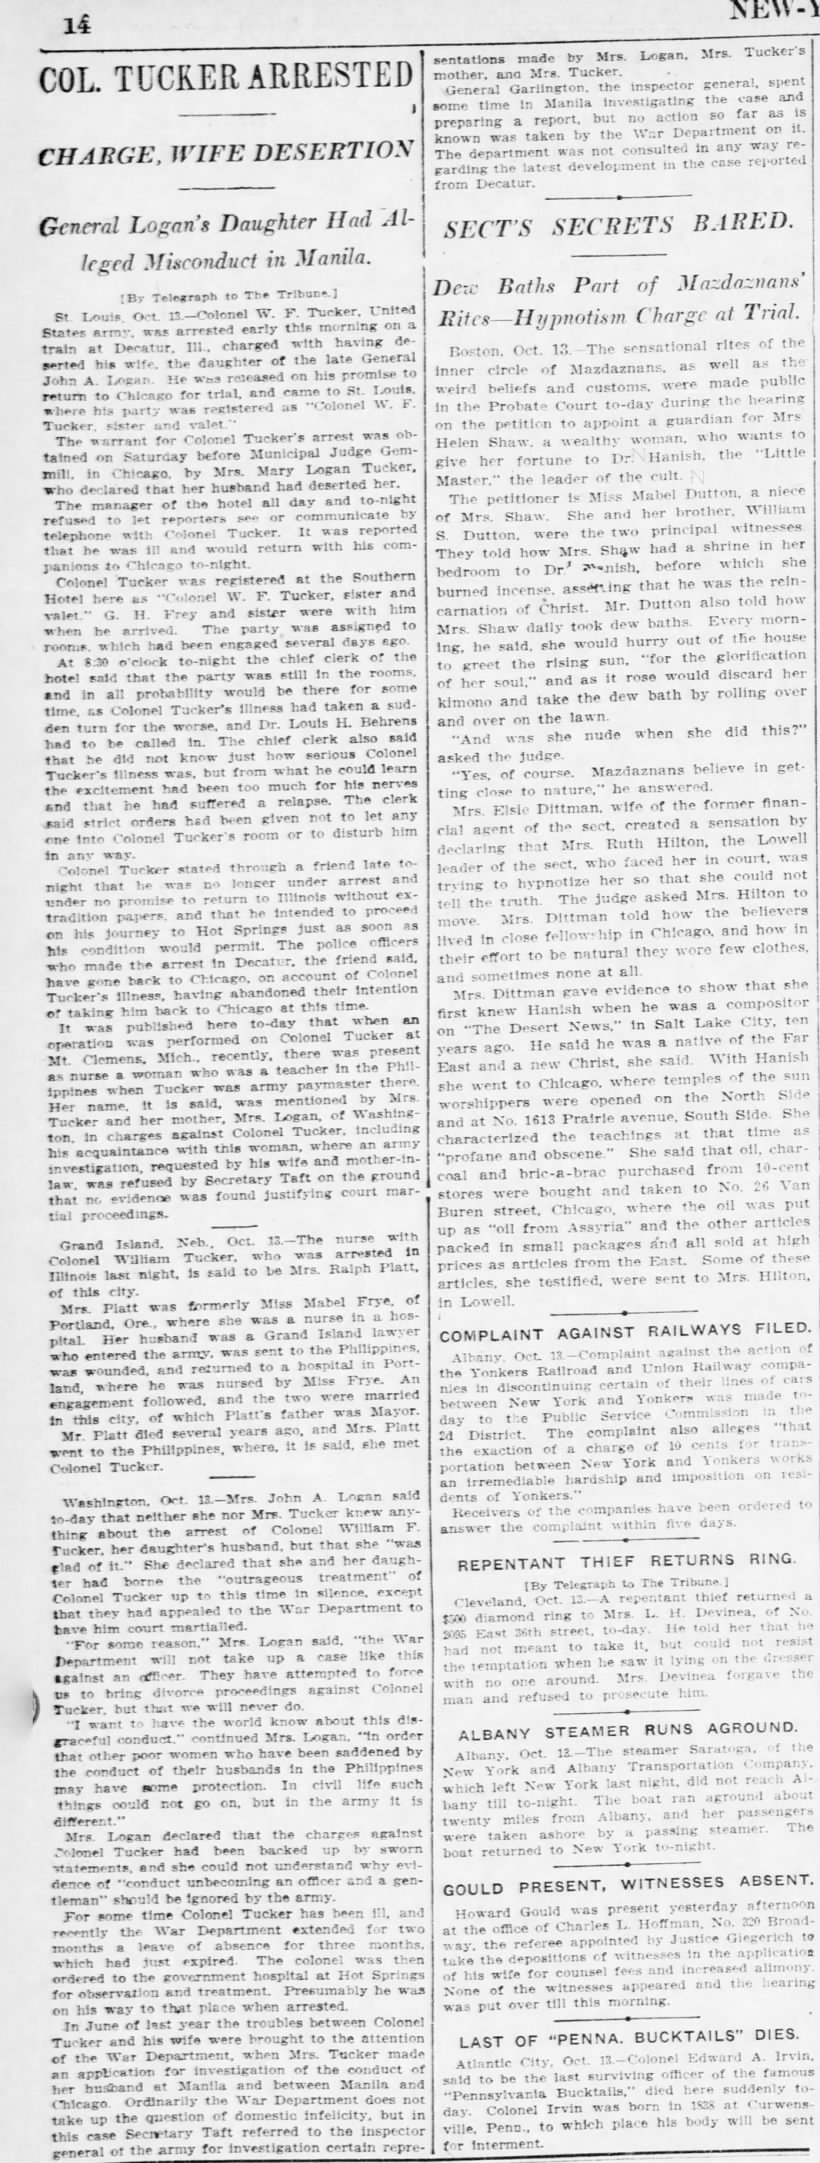 Col. Tucker Arrested. The New York Tribune (New York, New York) October 14m 1908, p 14